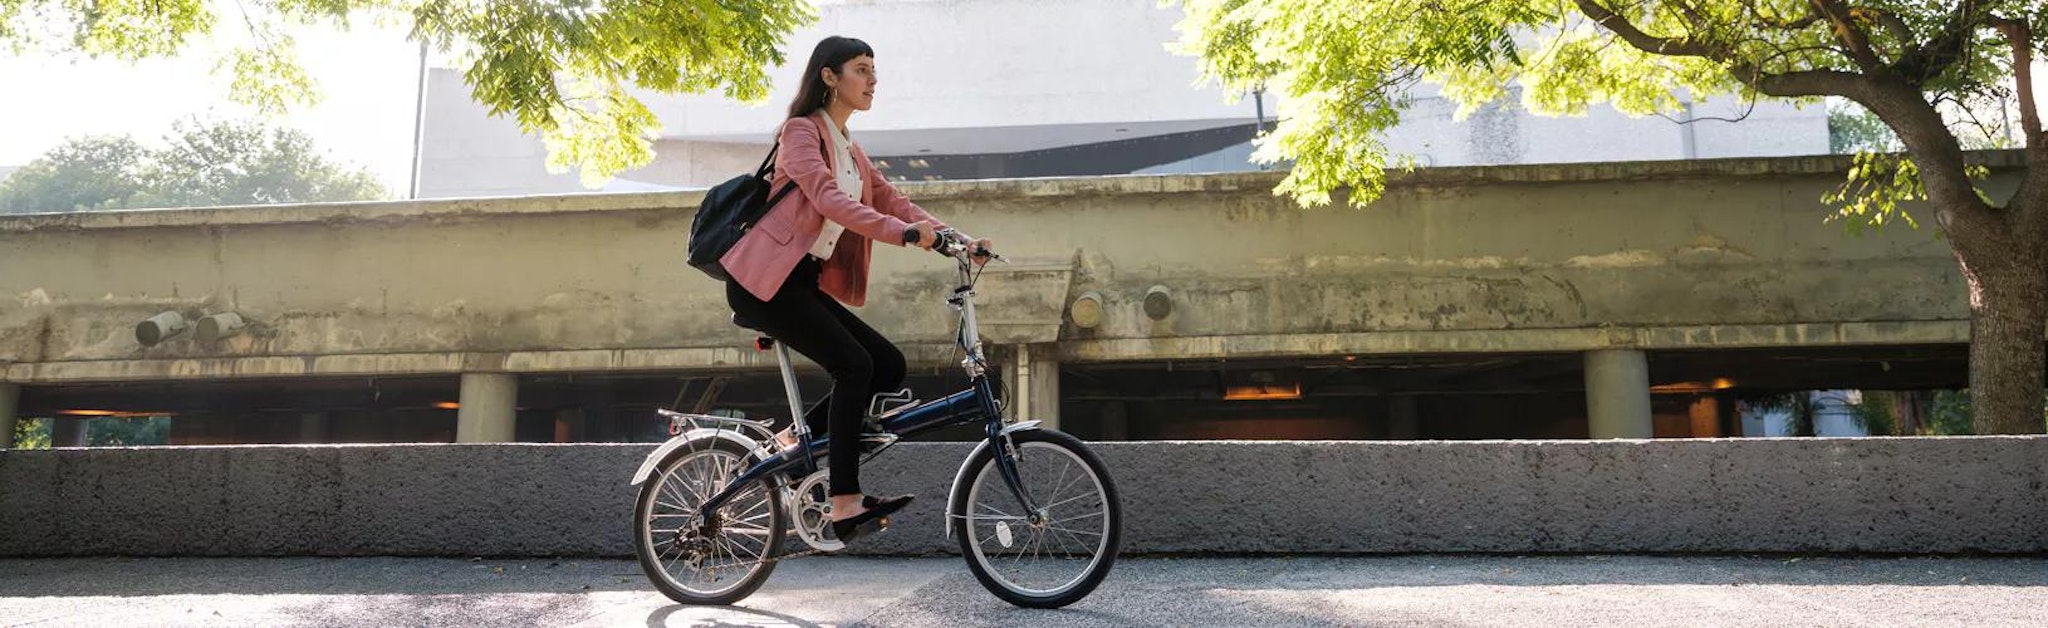 employee practicing sustainability by biking to work